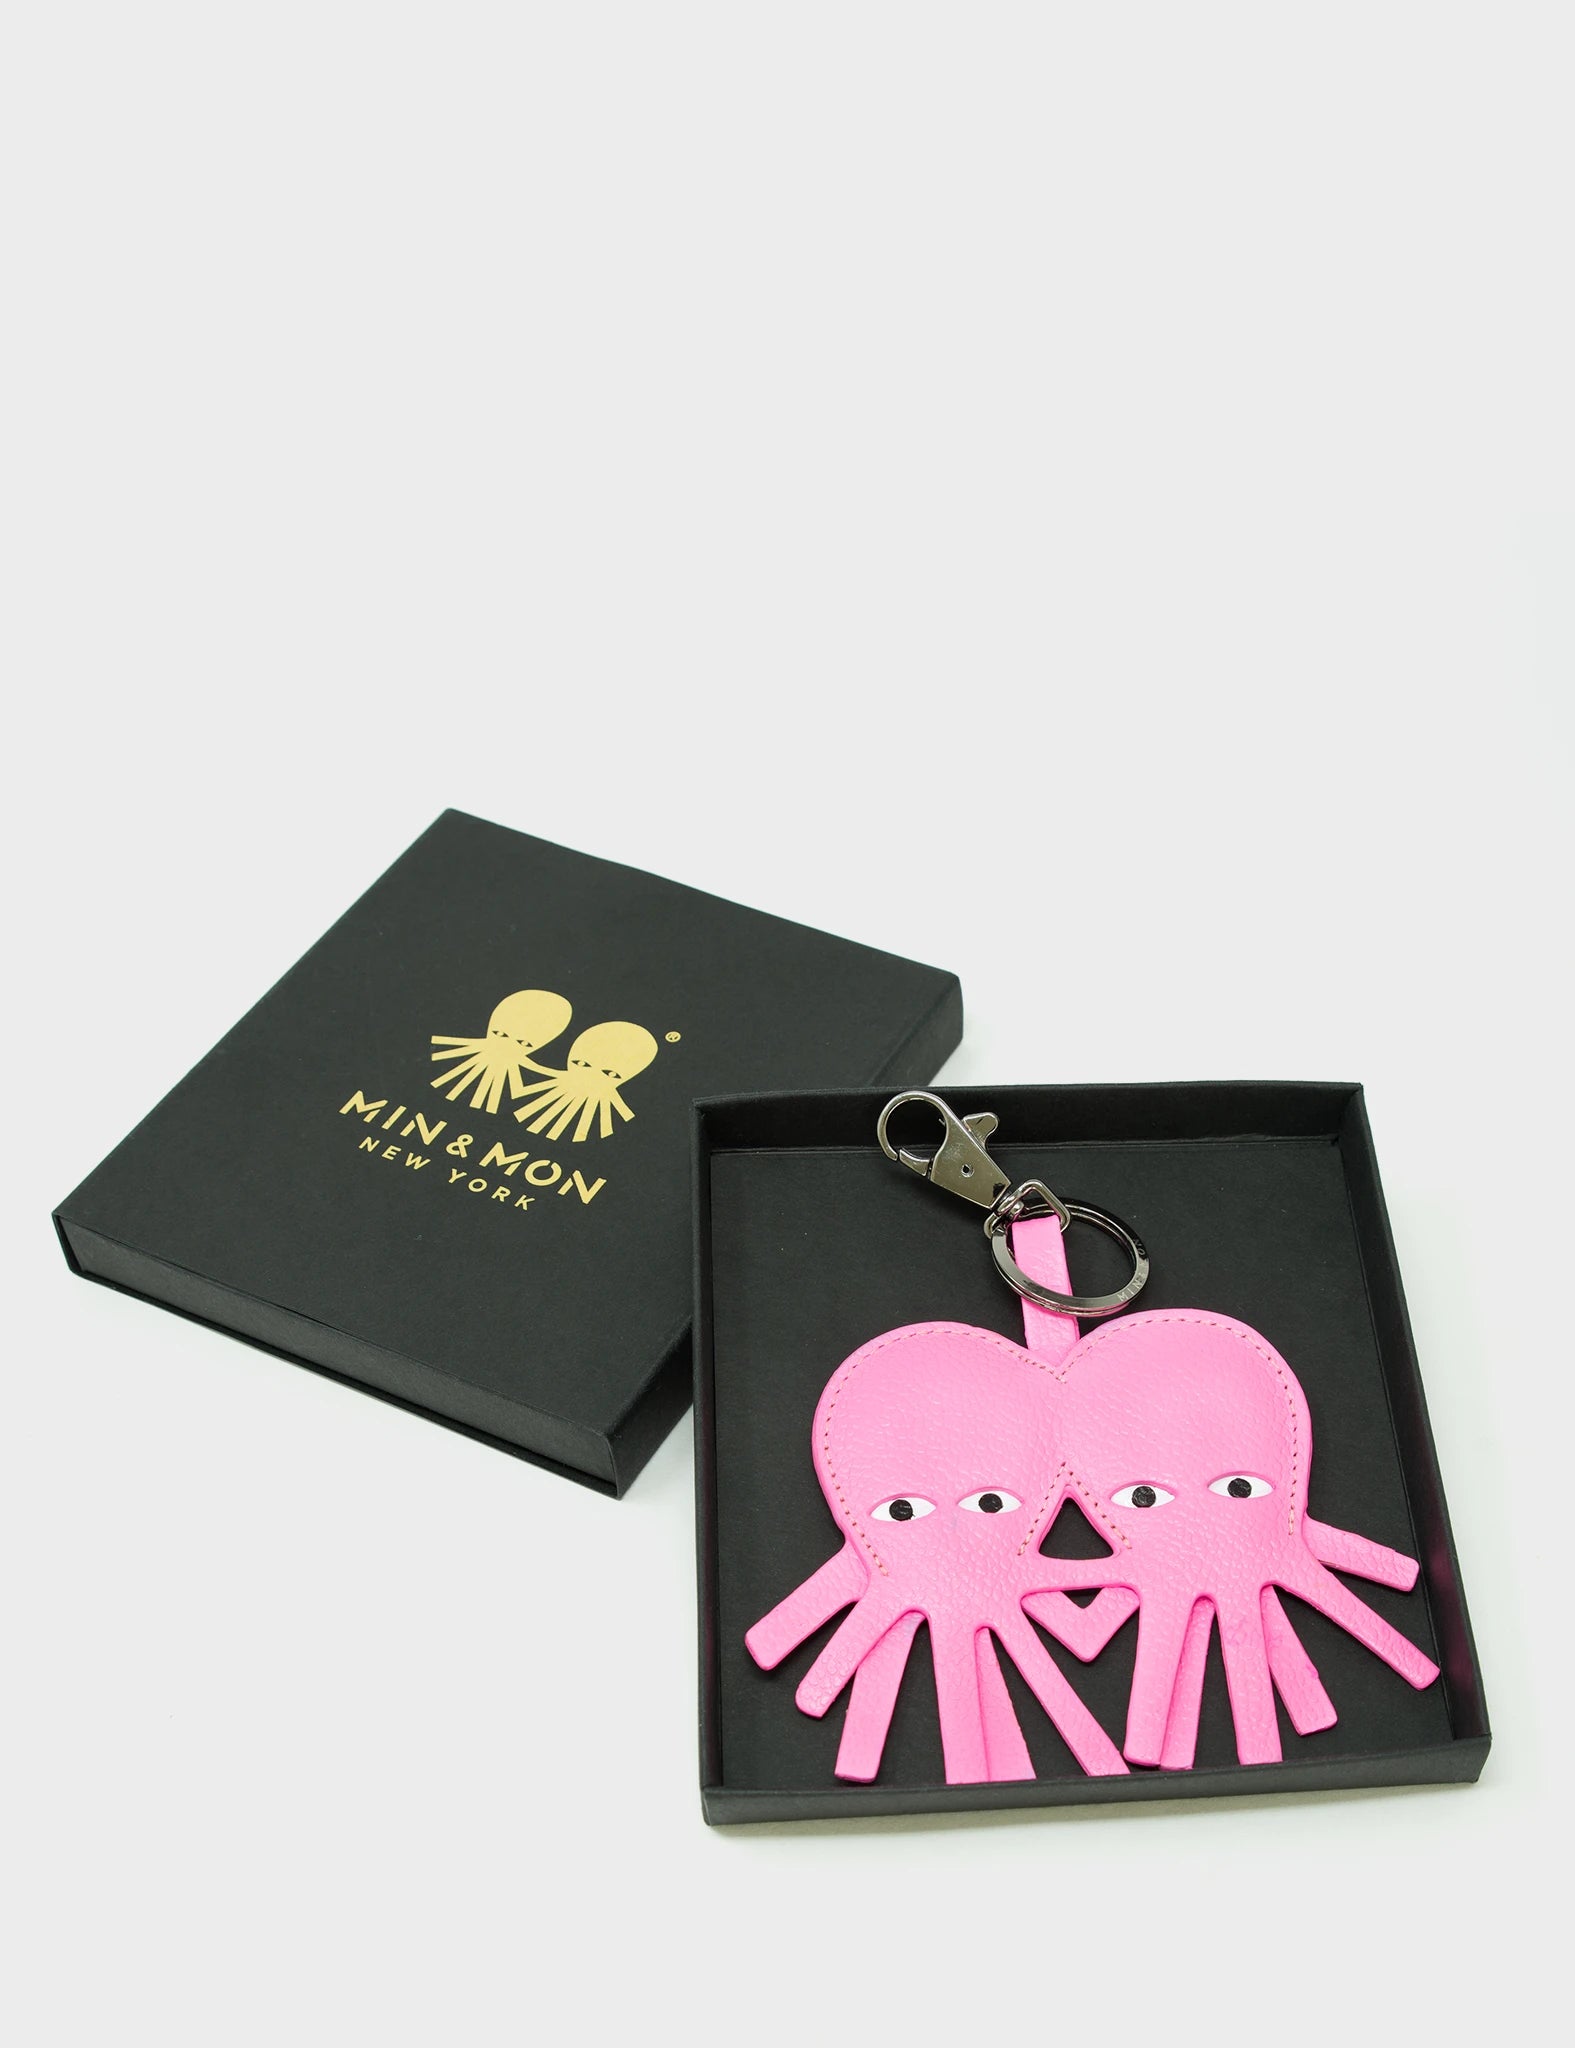 Octopus twins Charm - Bubblegum Pink Leather Keychain - Box